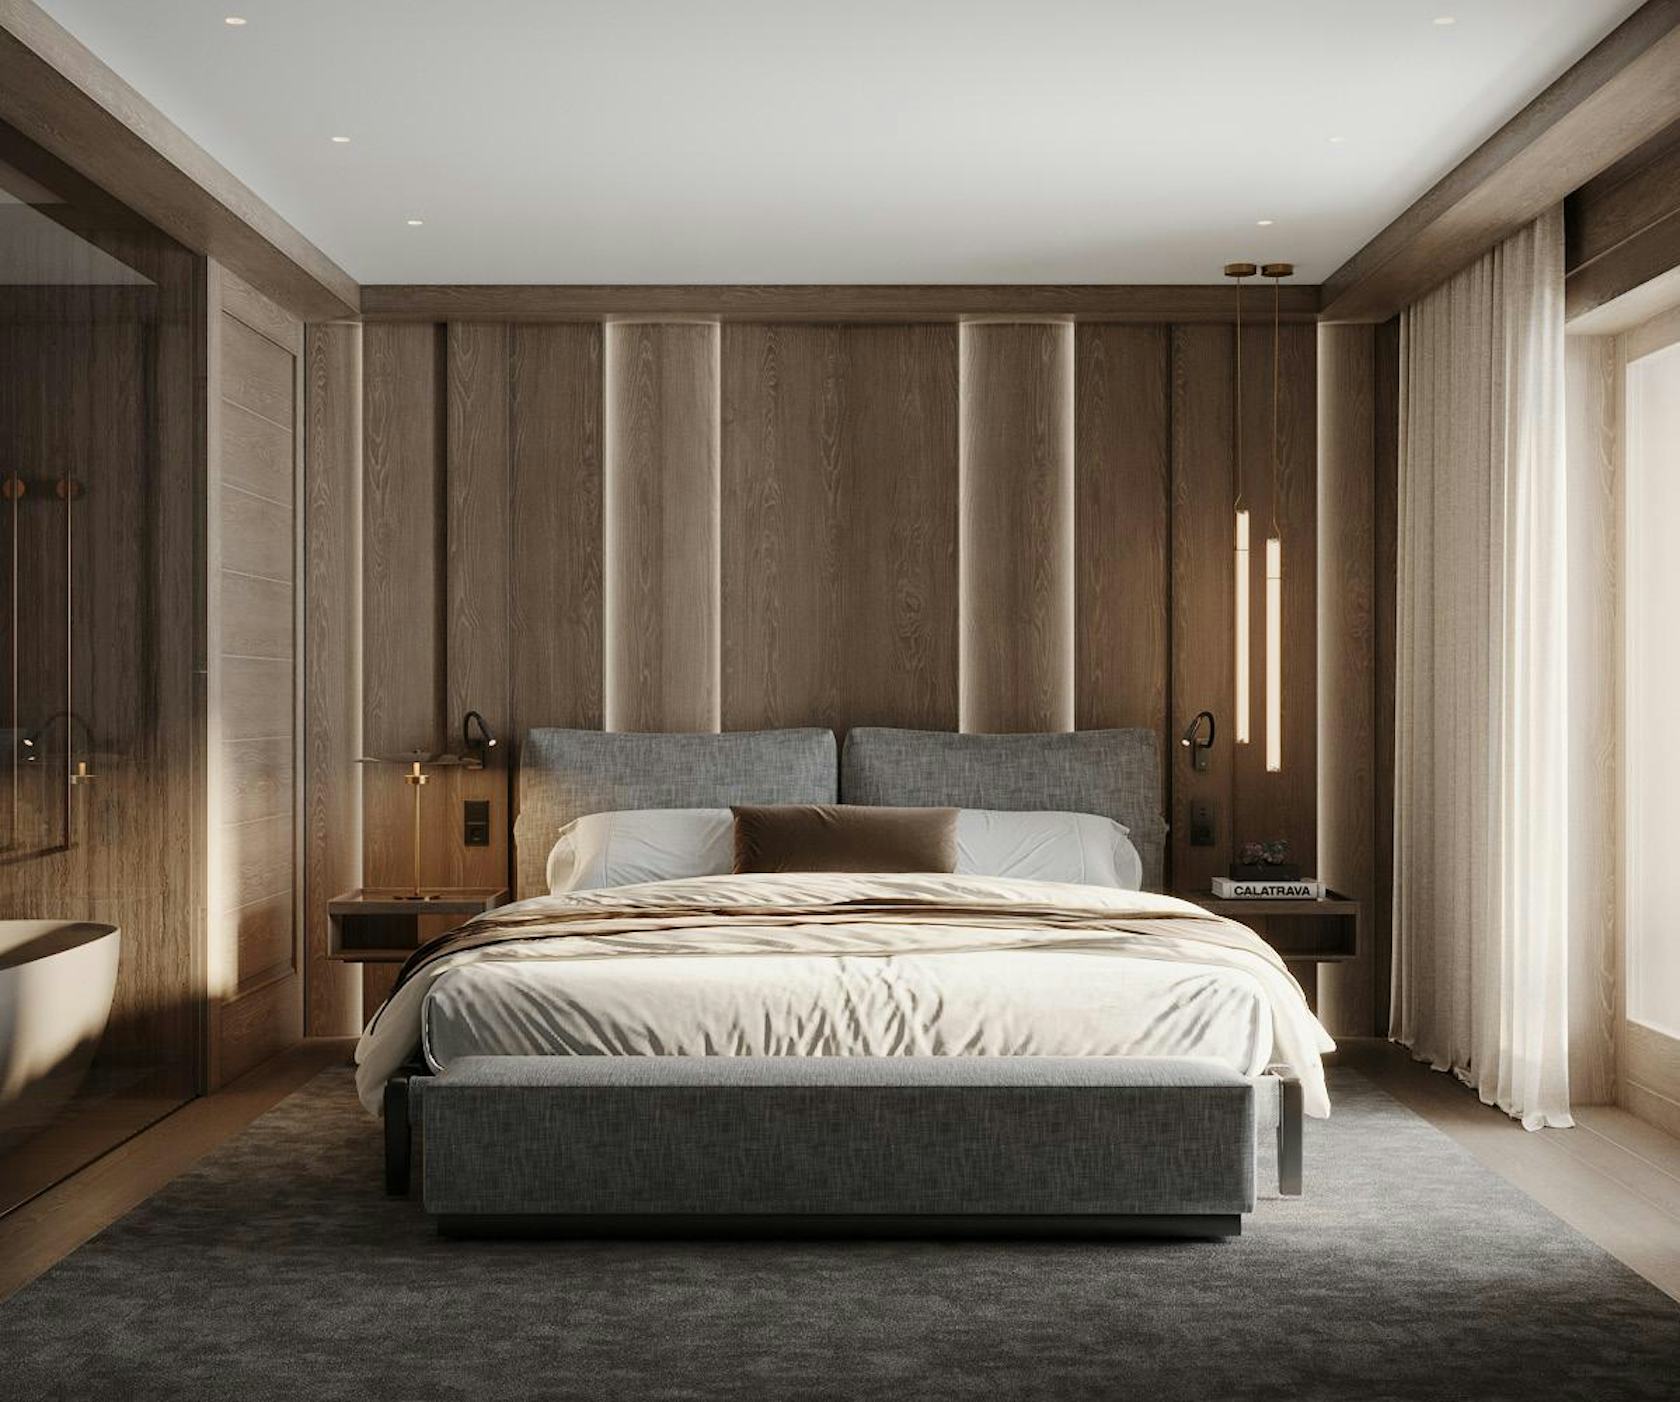 indoors interior design wood panels